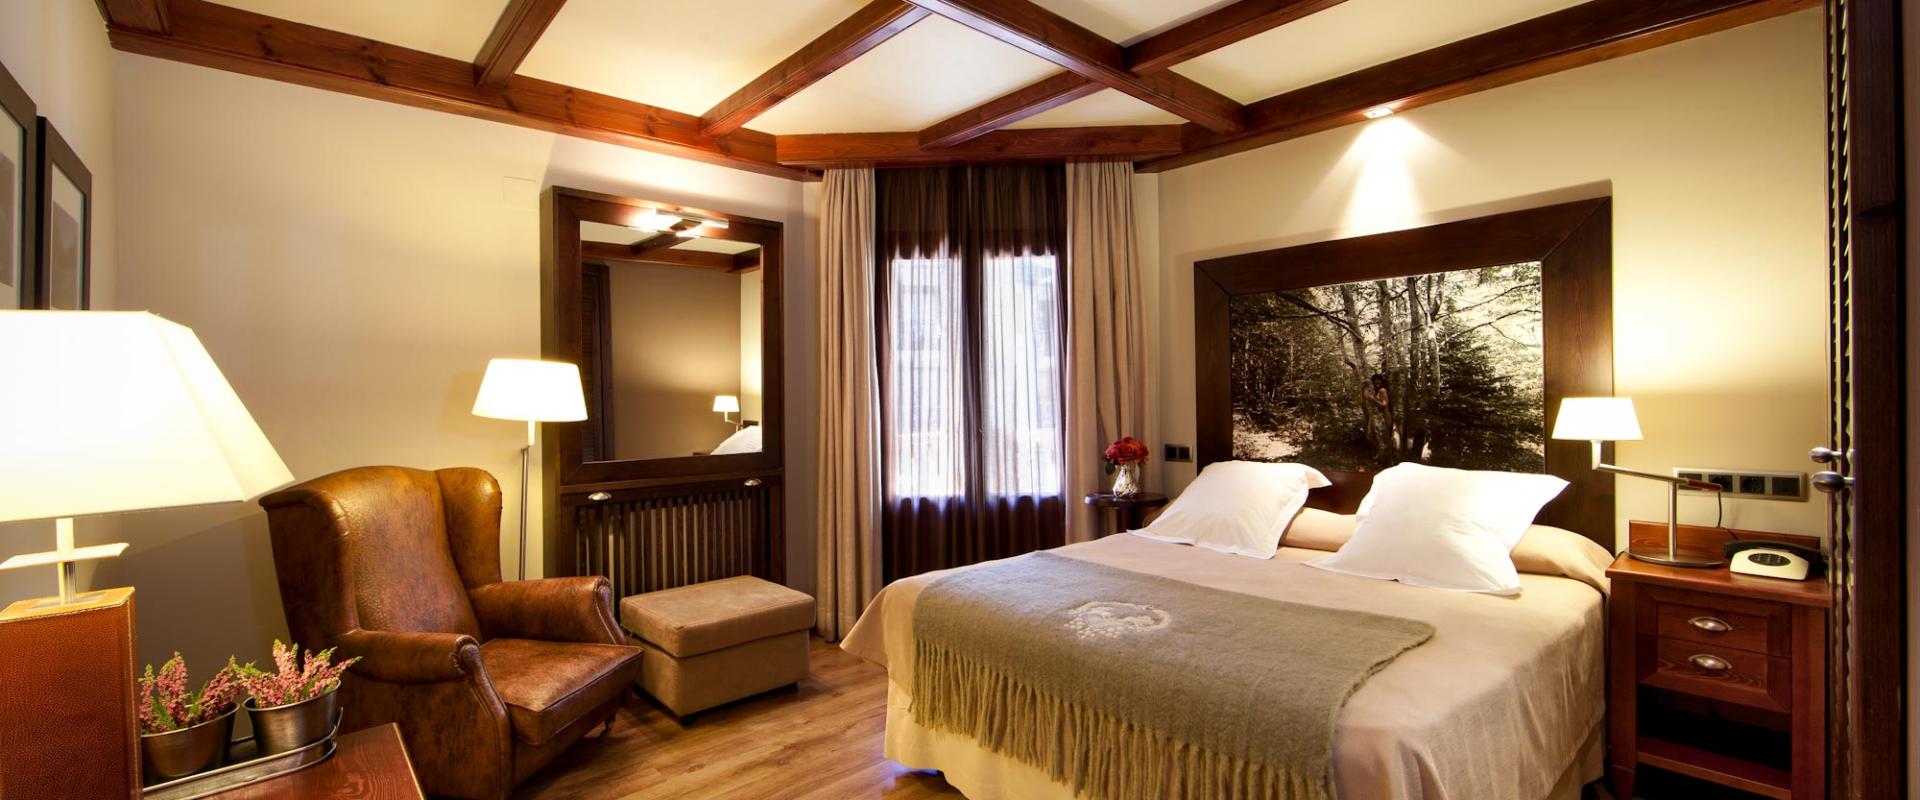 Hotel Ciria room